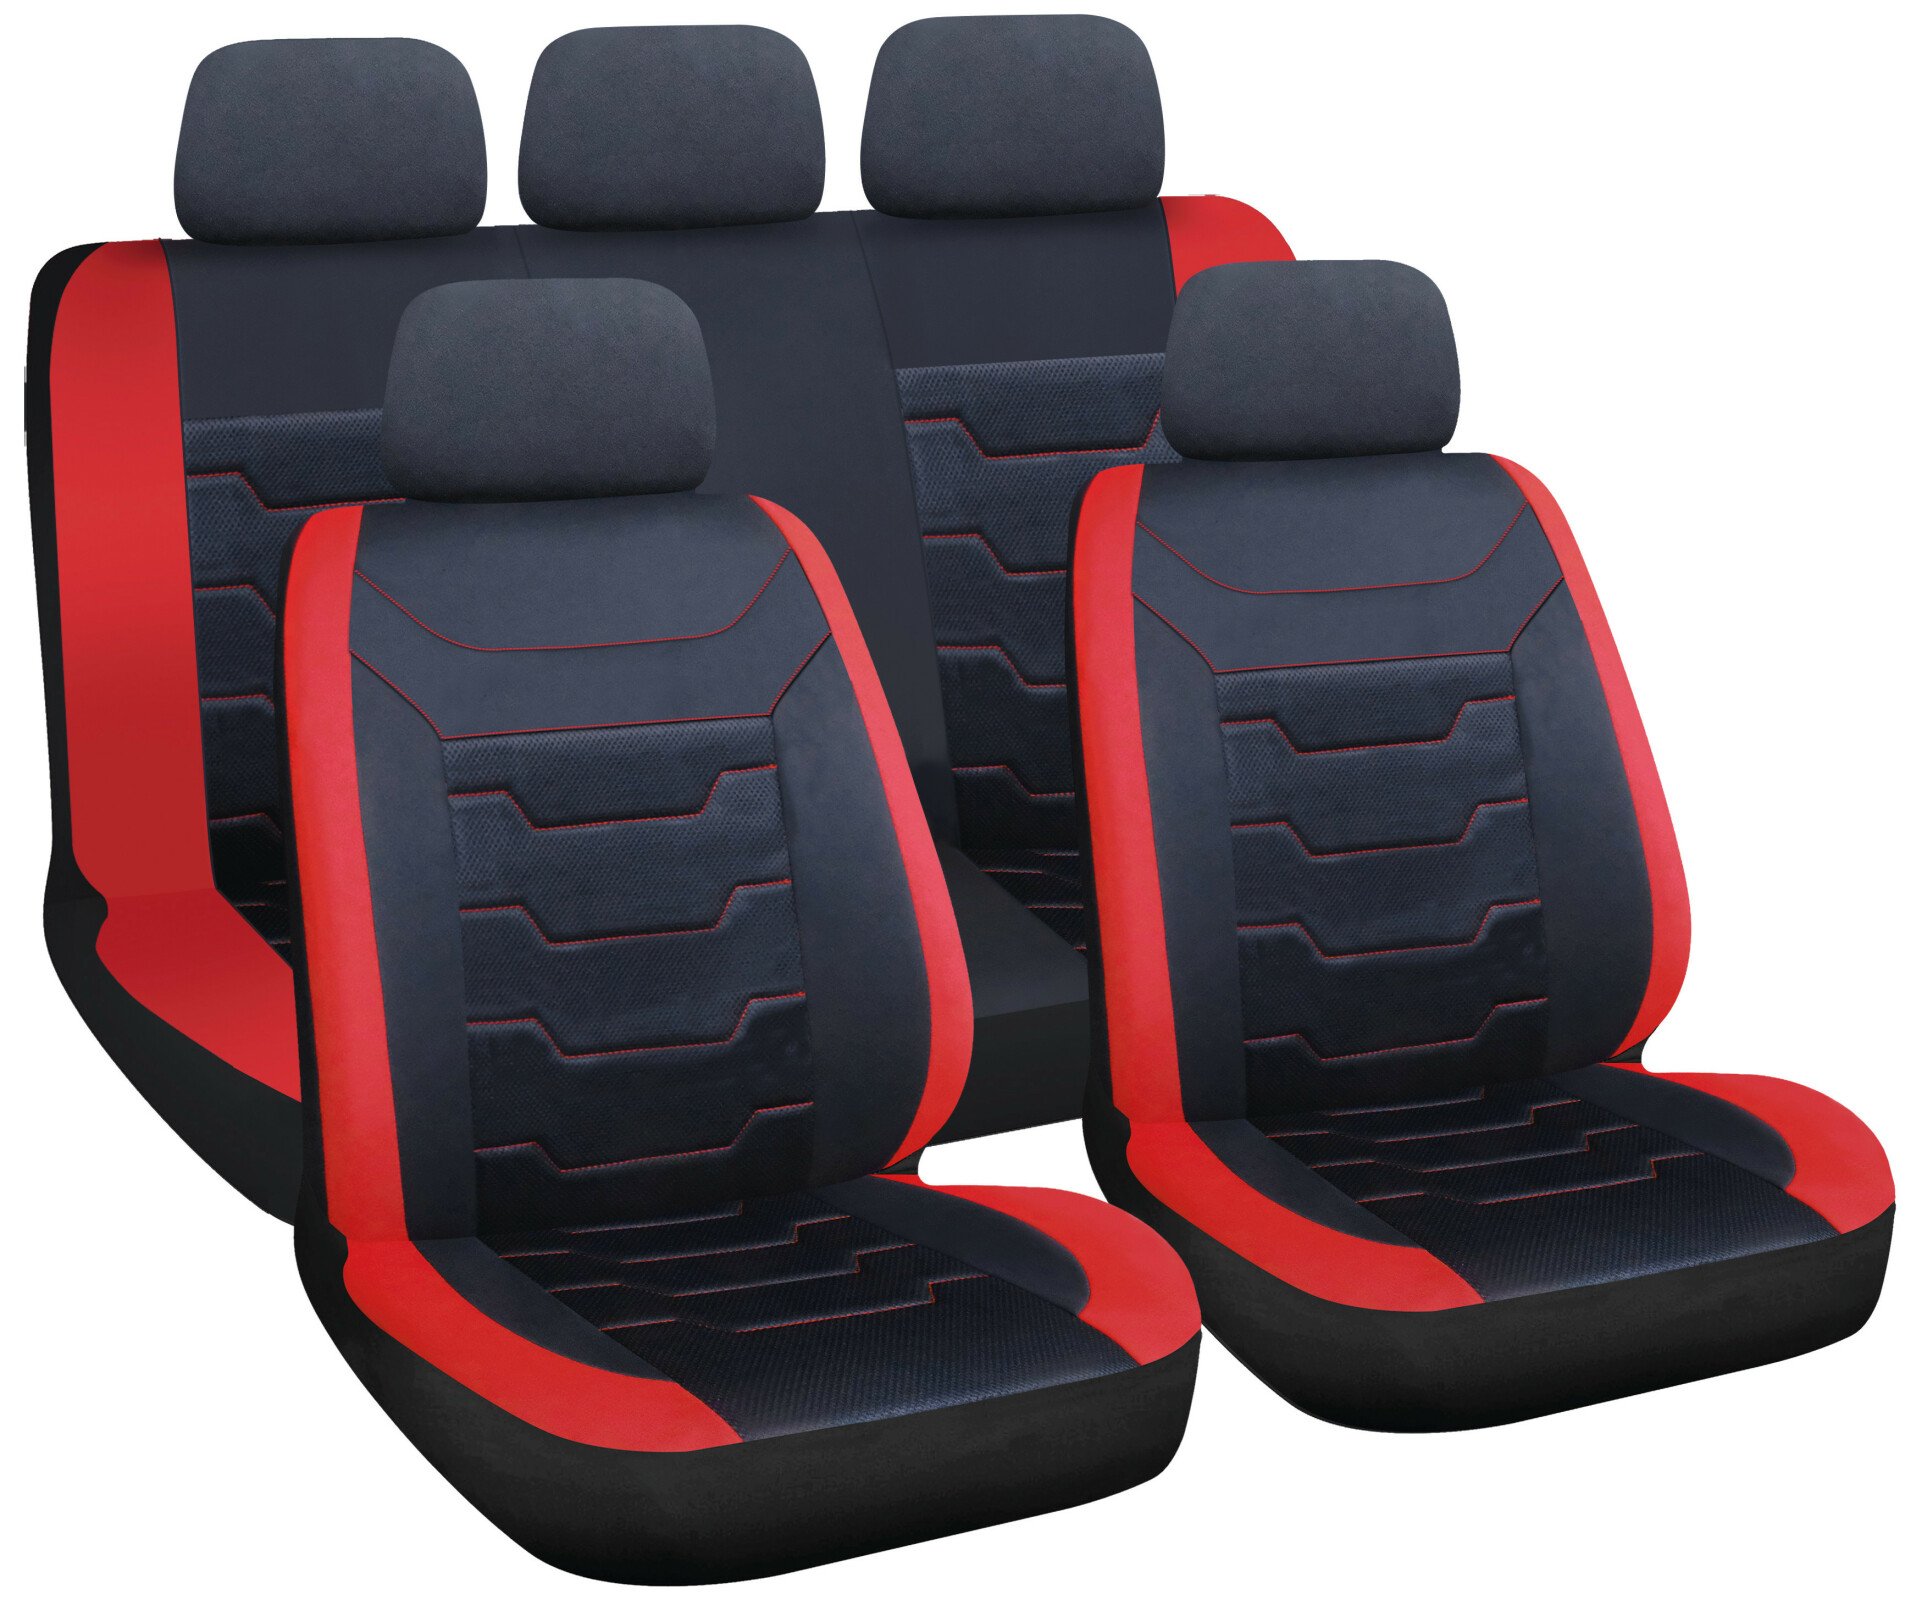 Drift, high-quality seat cover set 9pcs - Red/Black thumb